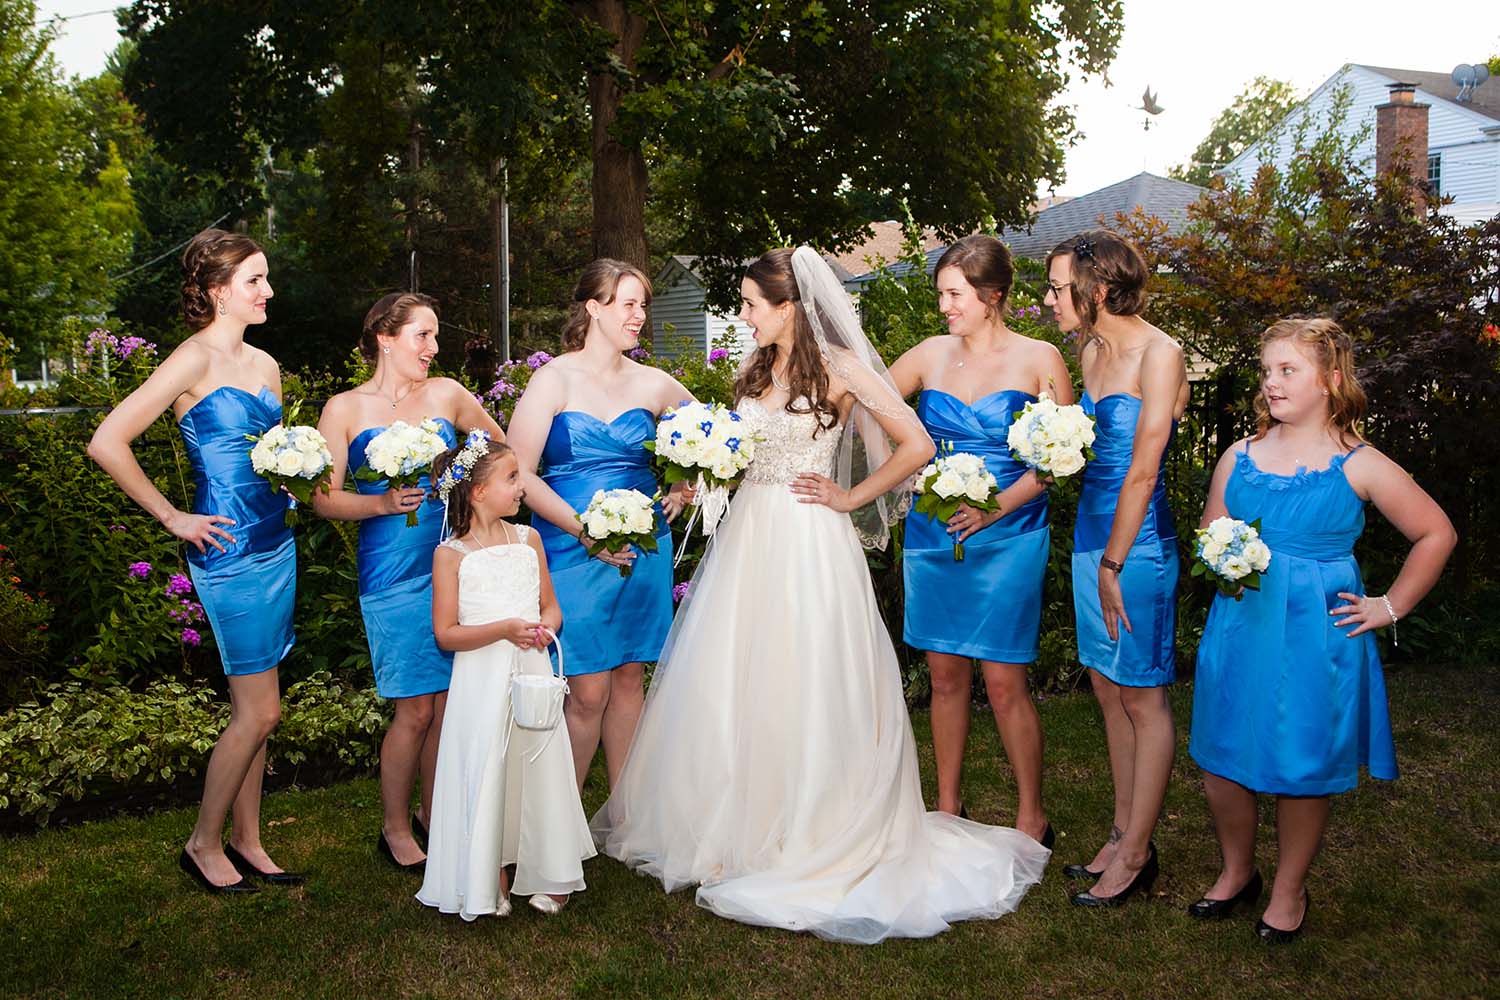 Bride and bridesmaid outdoor wedding portraits, Minneapolis Wedding Photographer
